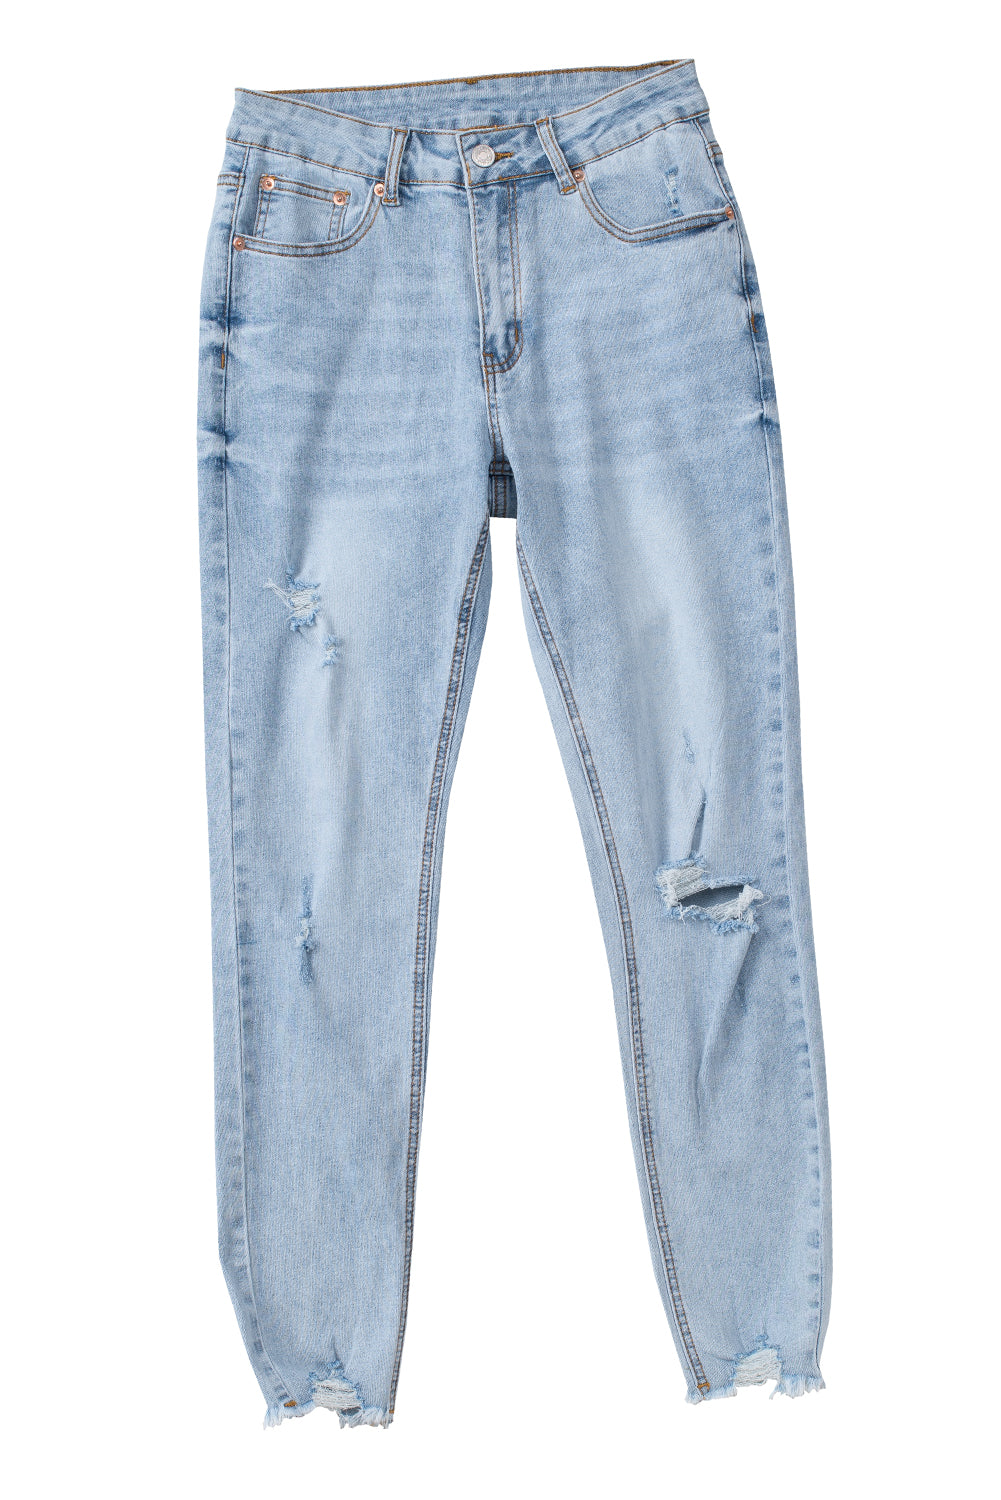 St. Barts Skinny Jeans